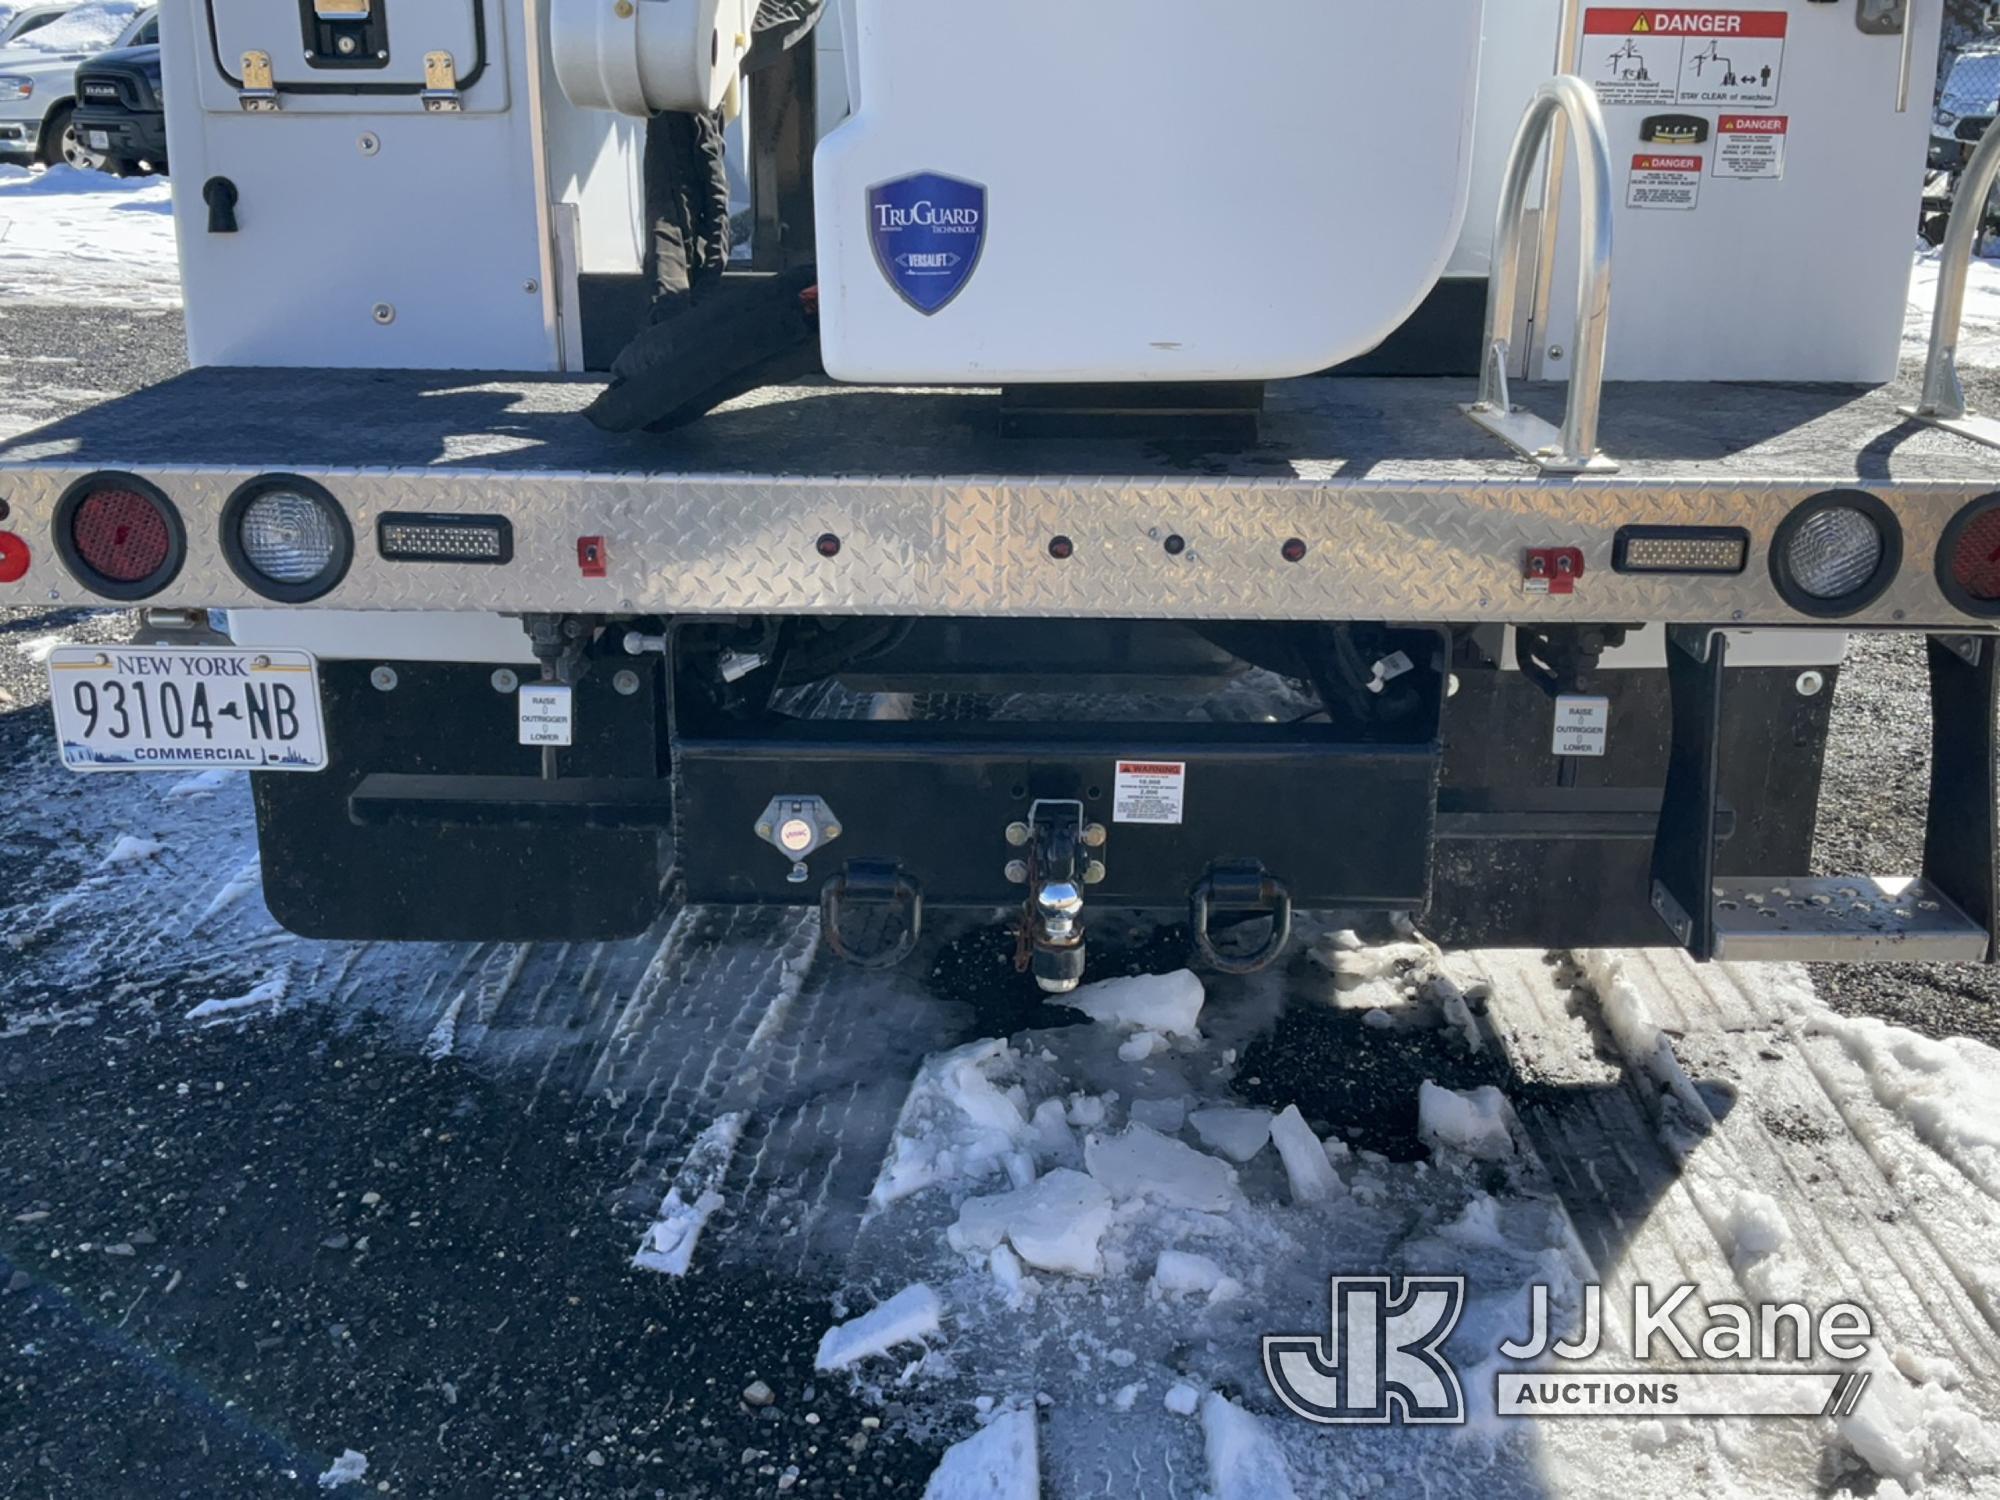 (Kings Park, NY) Versalift VST-40I, Articulating & Telescopic Material Handling Bucket Truck mounted